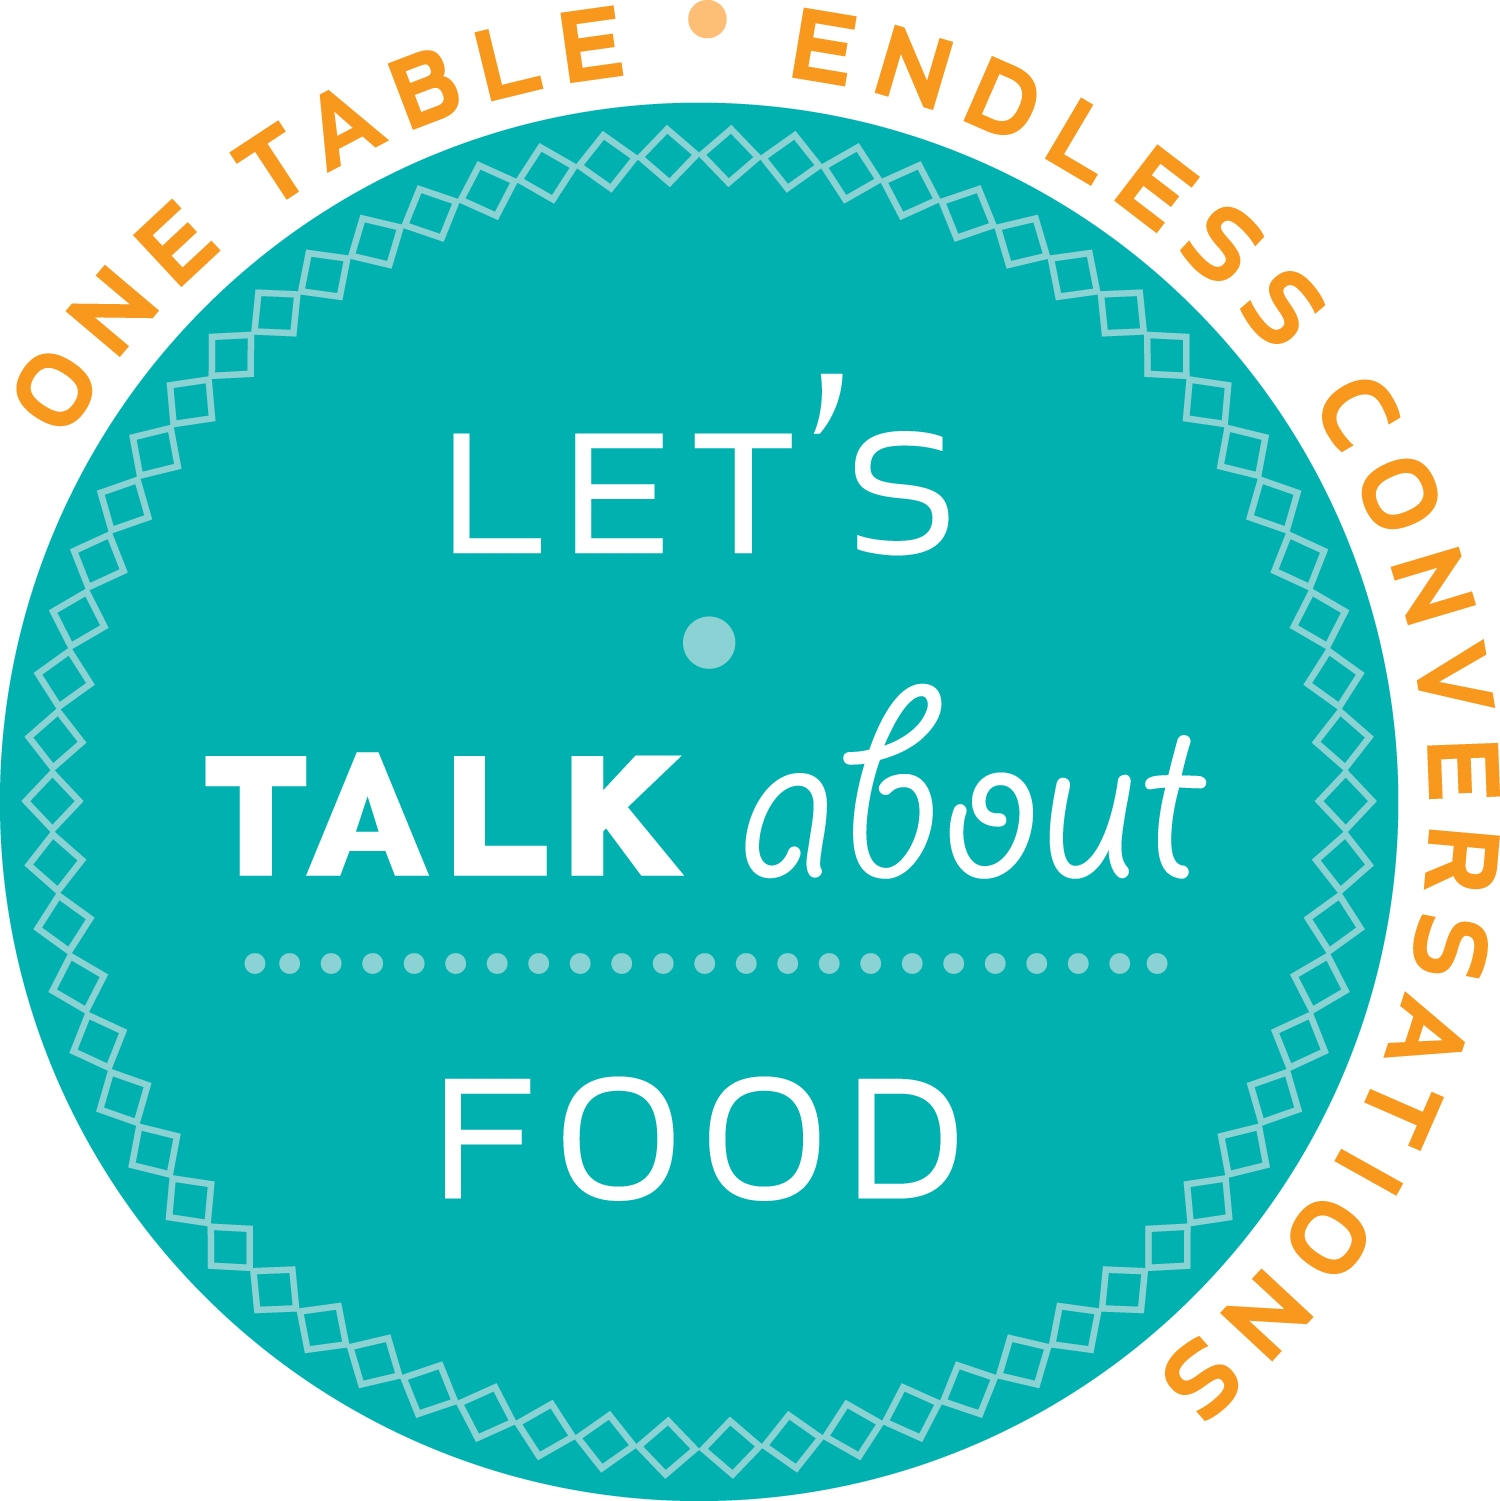 Let them speak. Let's talk about food. Lets talk food. Talk about food. Логотип фестиваля еды.